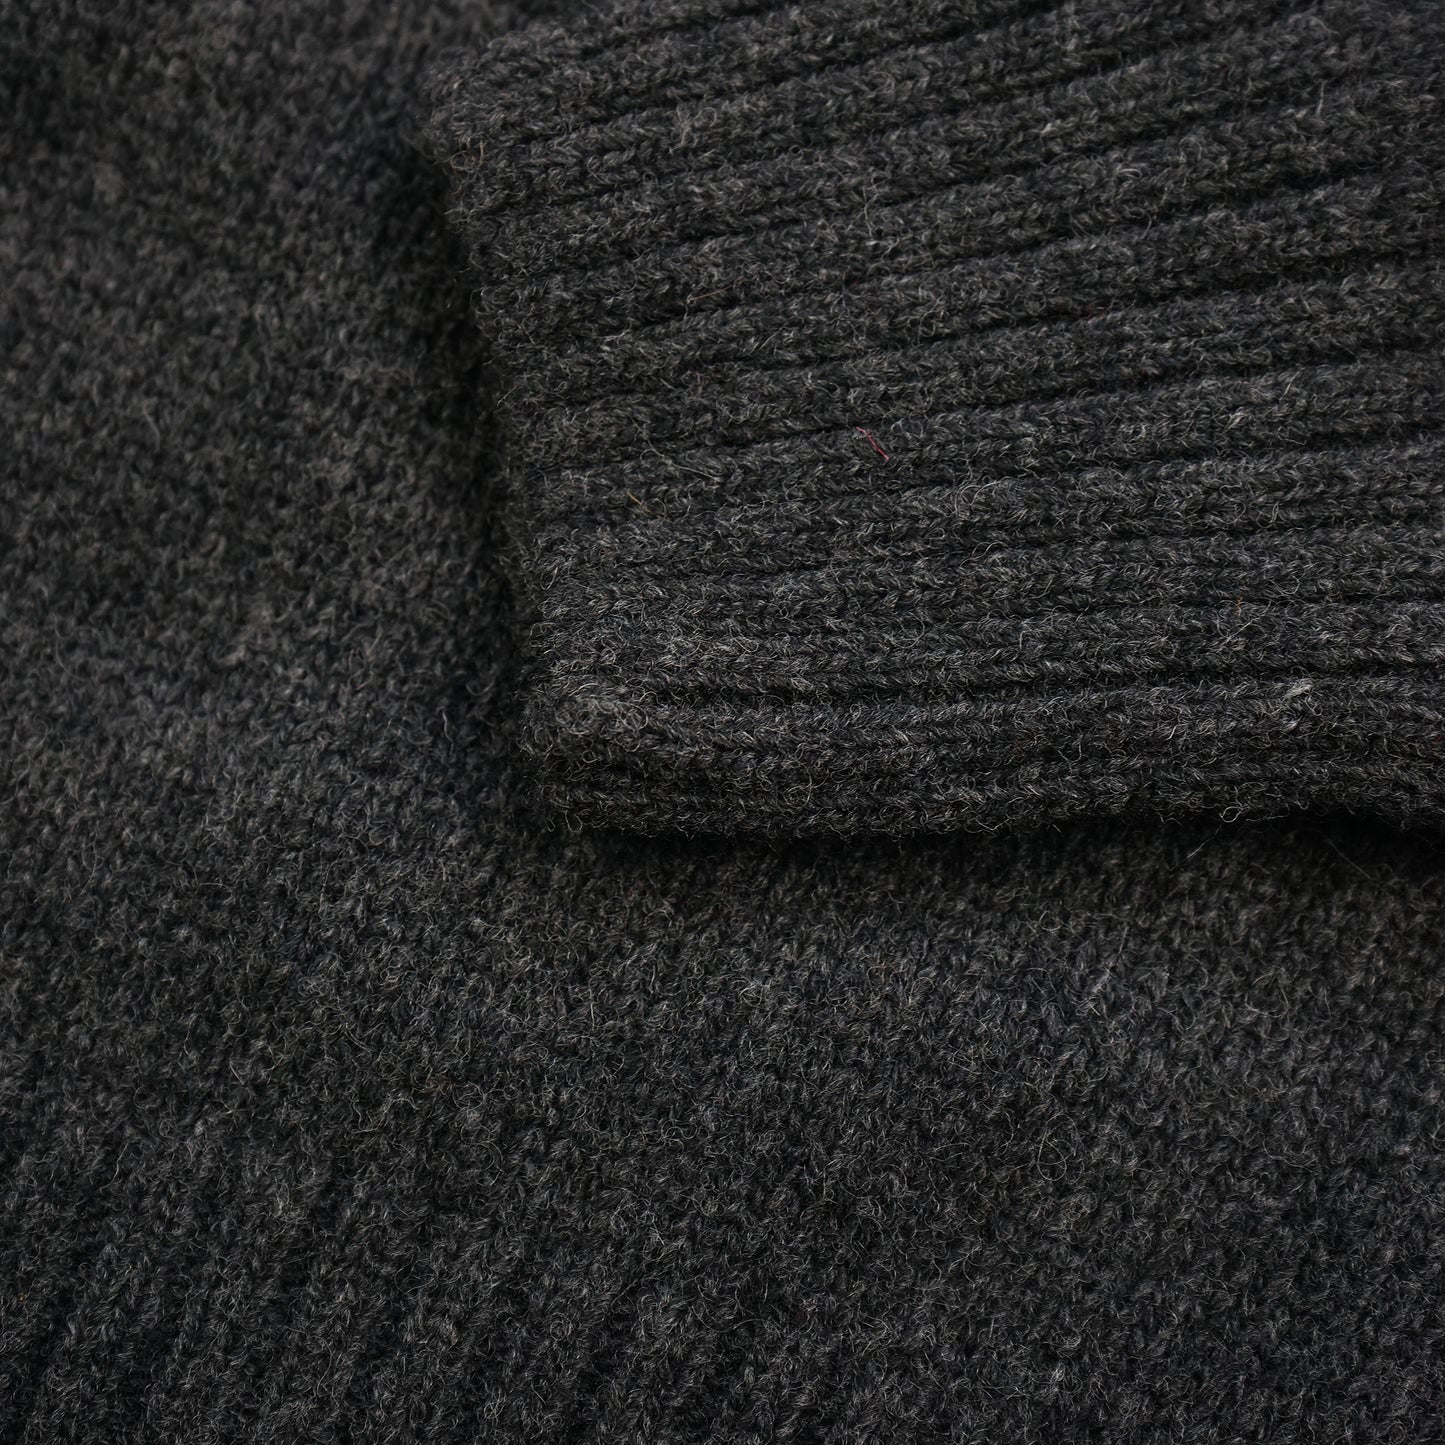 Obi Charcoal Sweater